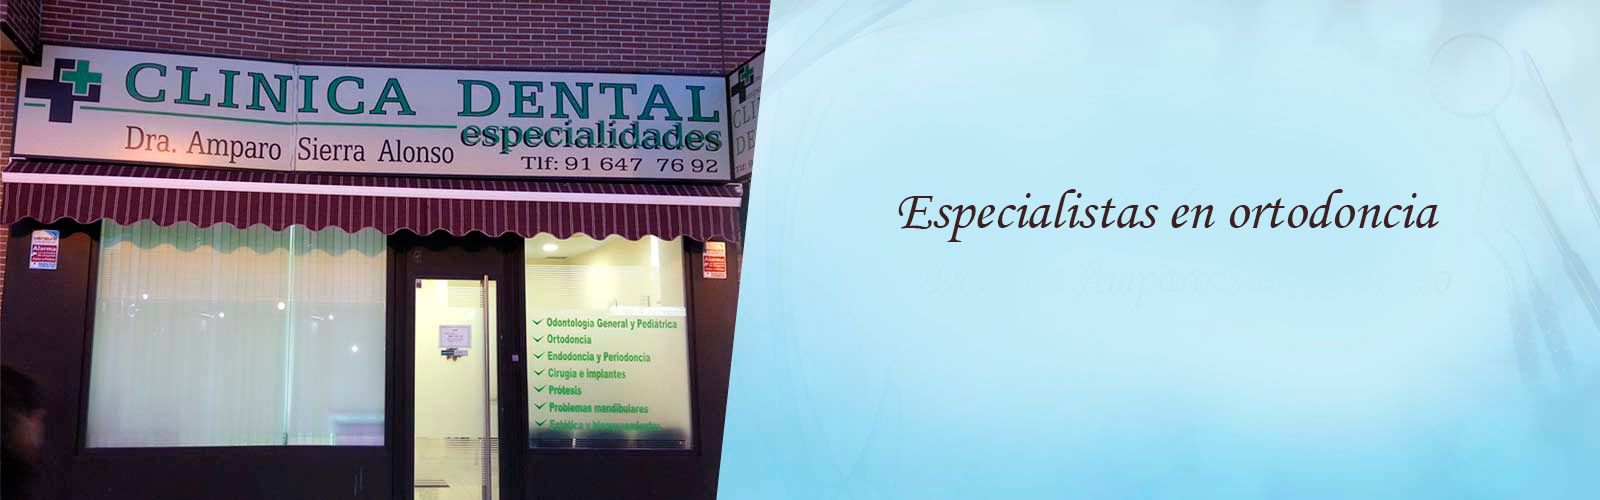 Clínica Dental de Especialidades Doctora Amparo Sierra Alonso banner numero tres